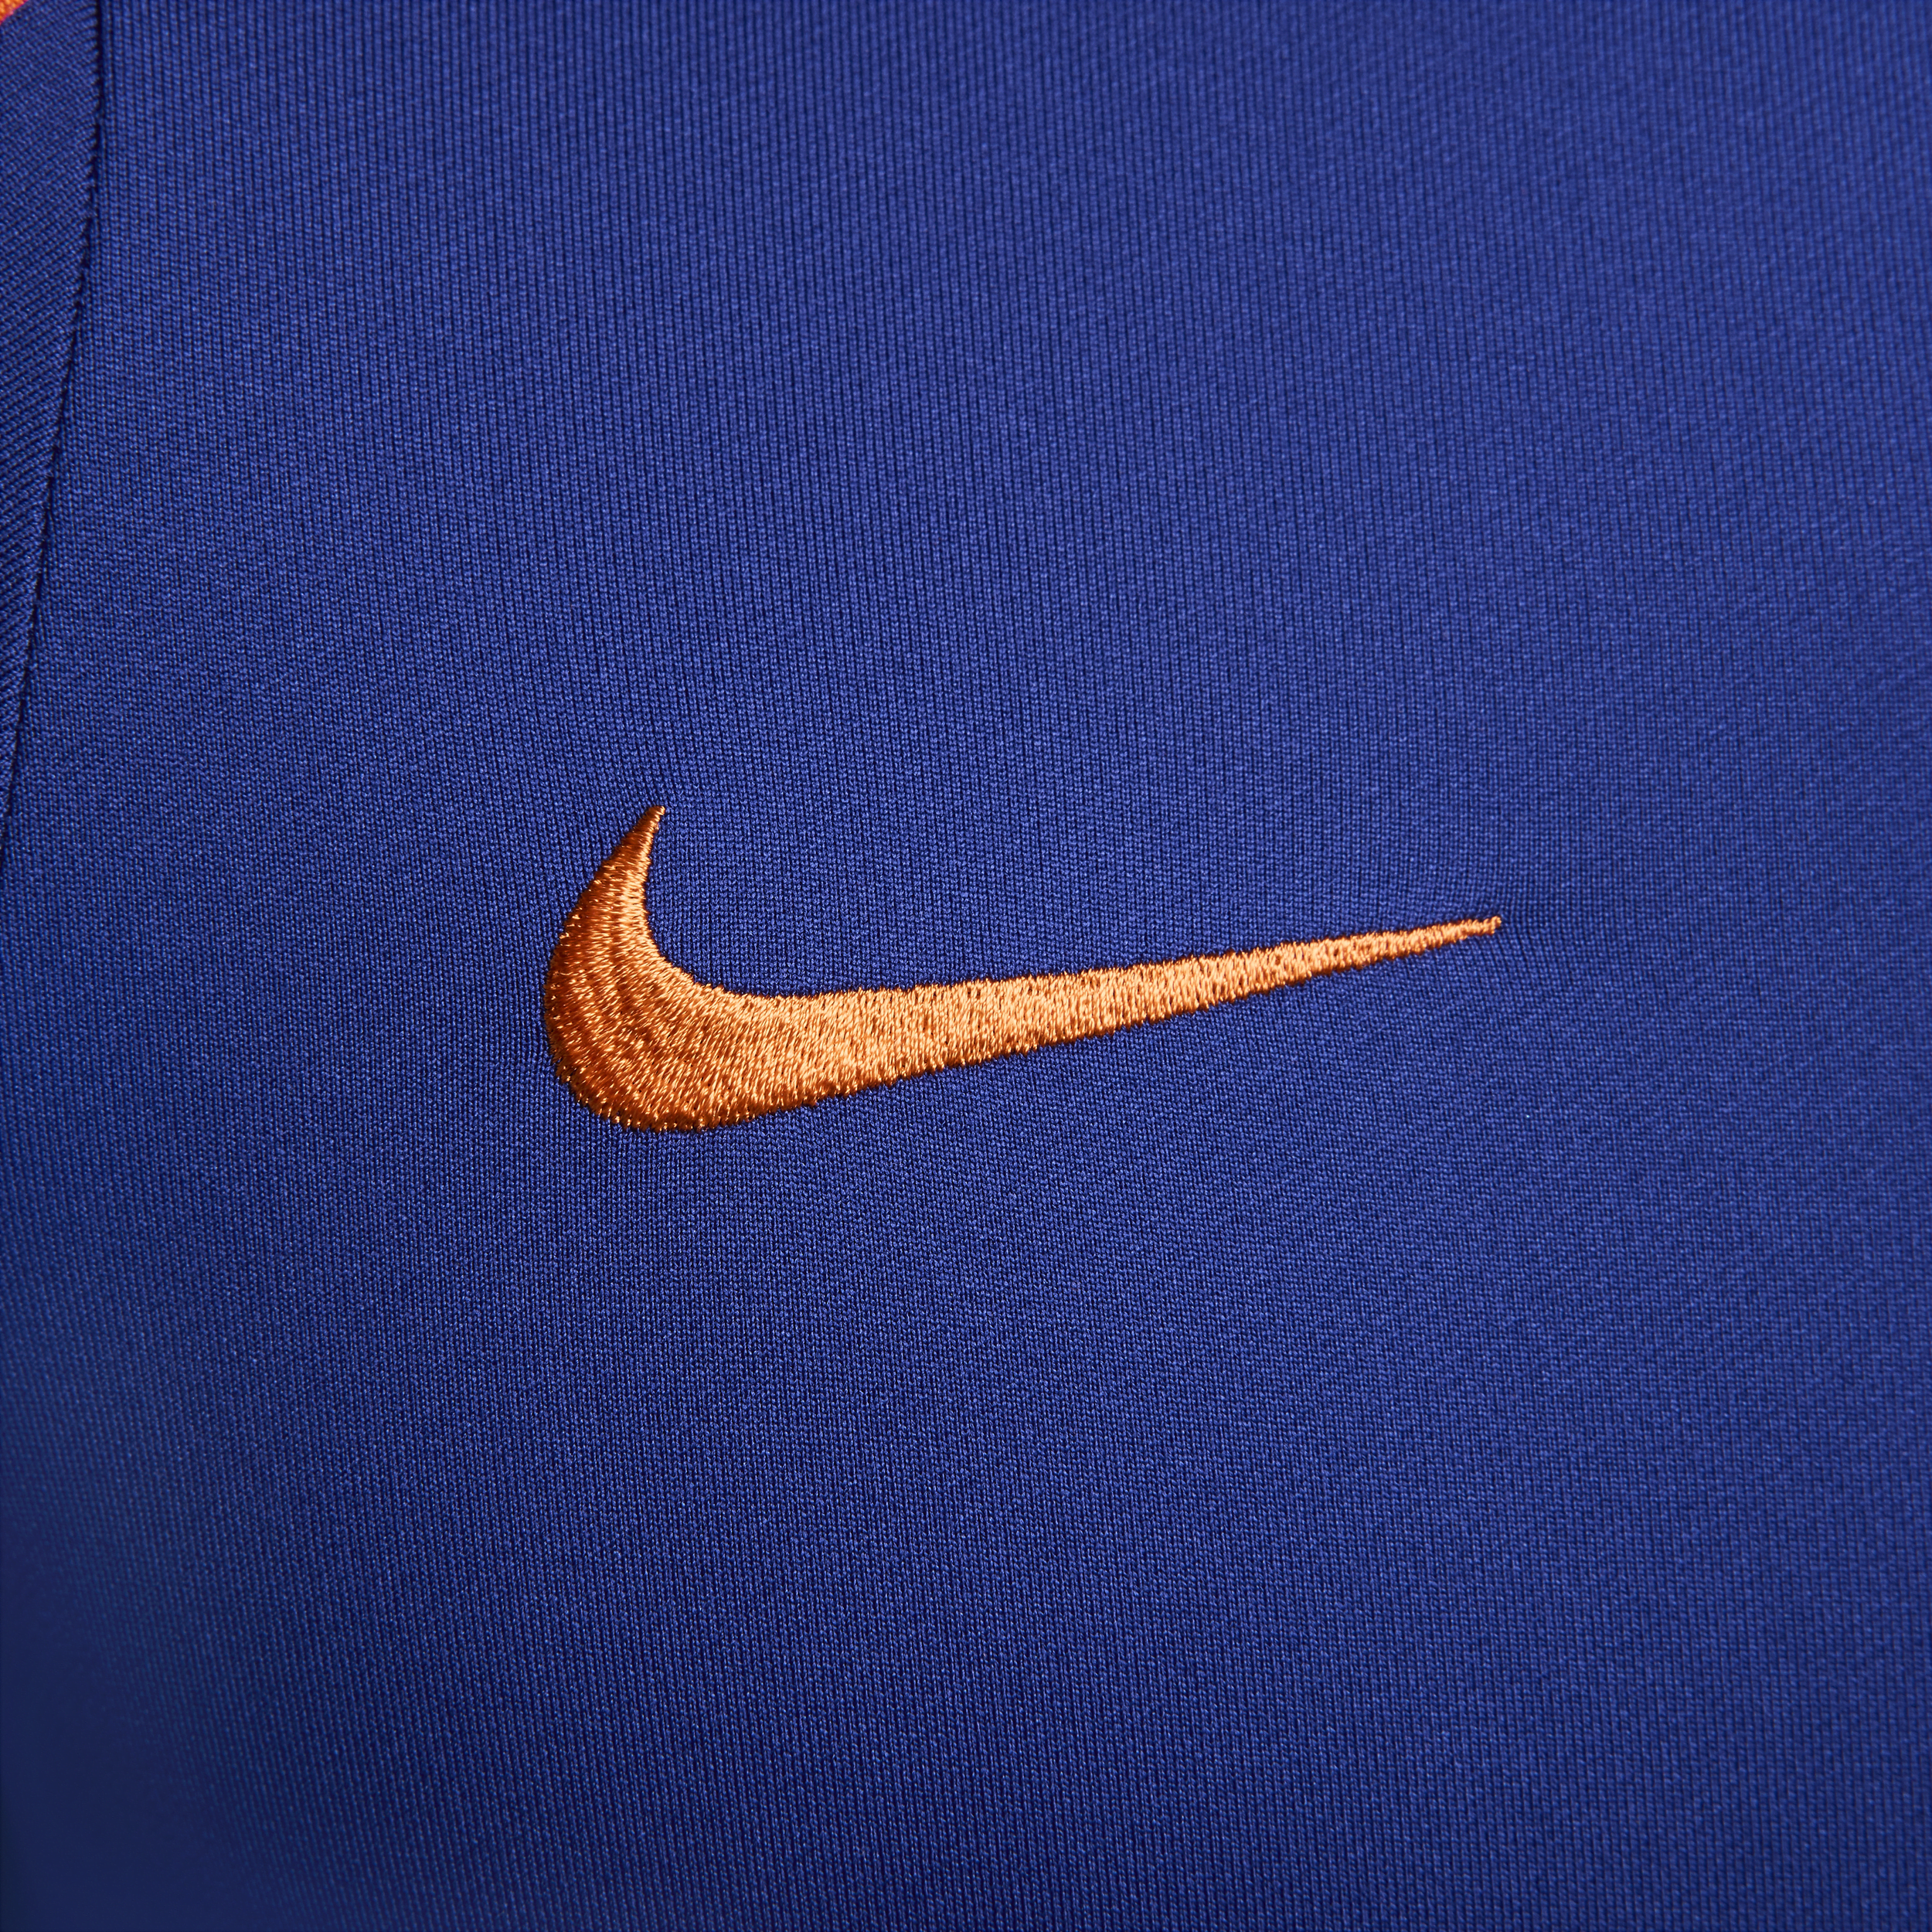 Nike Nederland Strike Dri-FIT voetbaltrainingstop voor heren Blauw